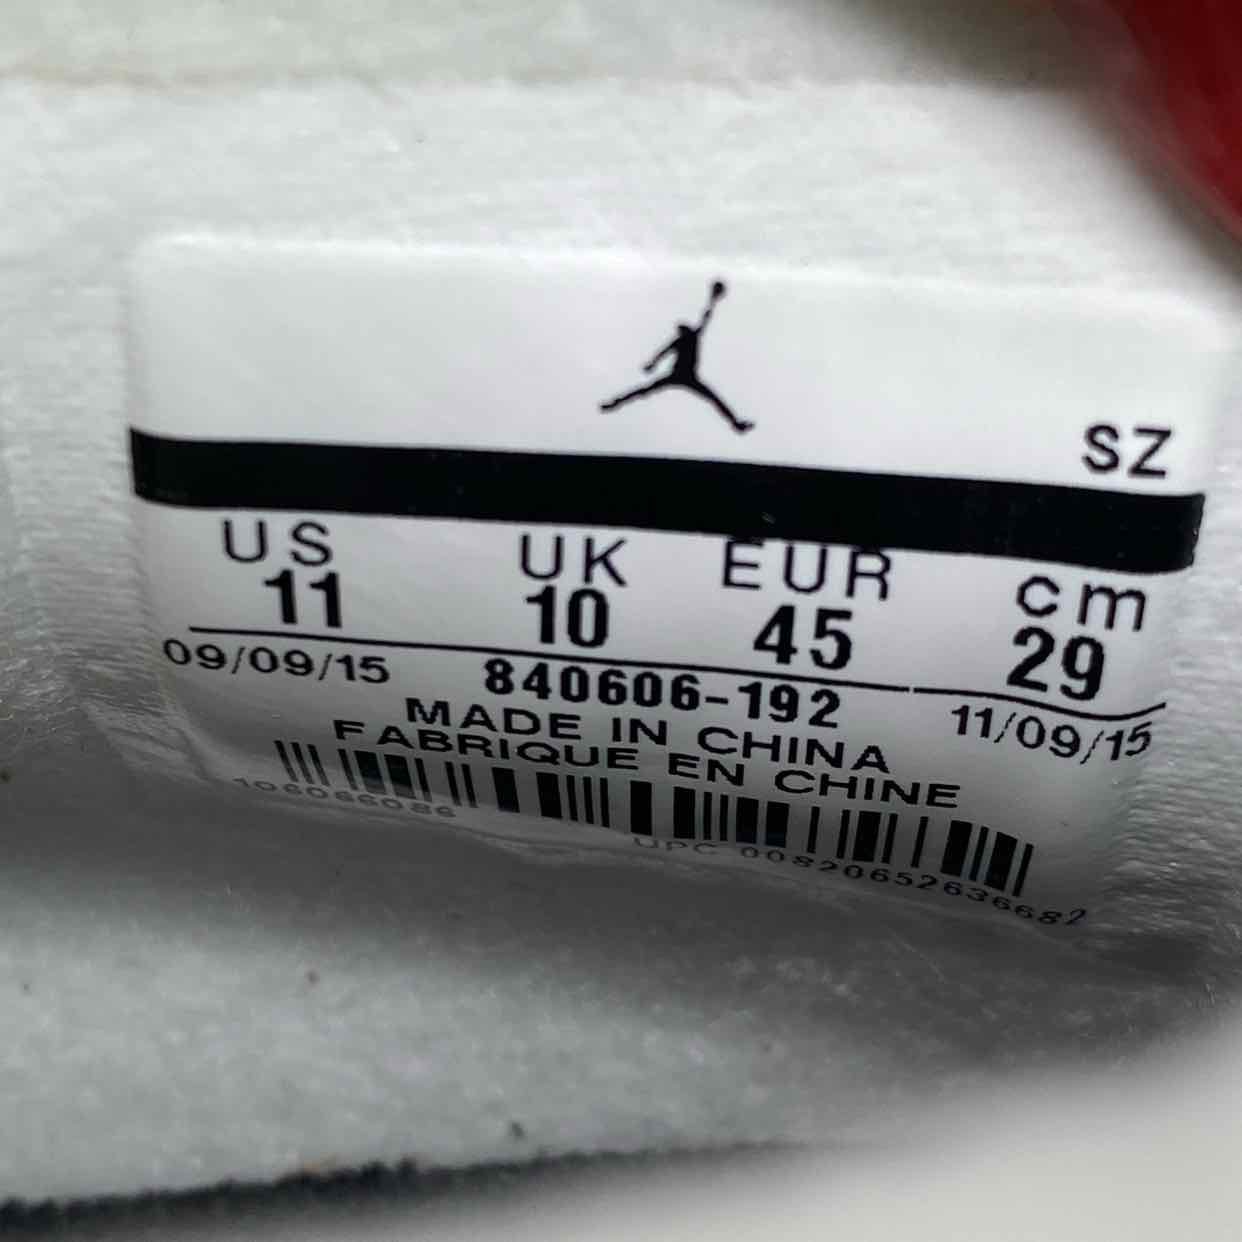 Air Jordan 4 Retro "White Cement" 2016 New Size 11